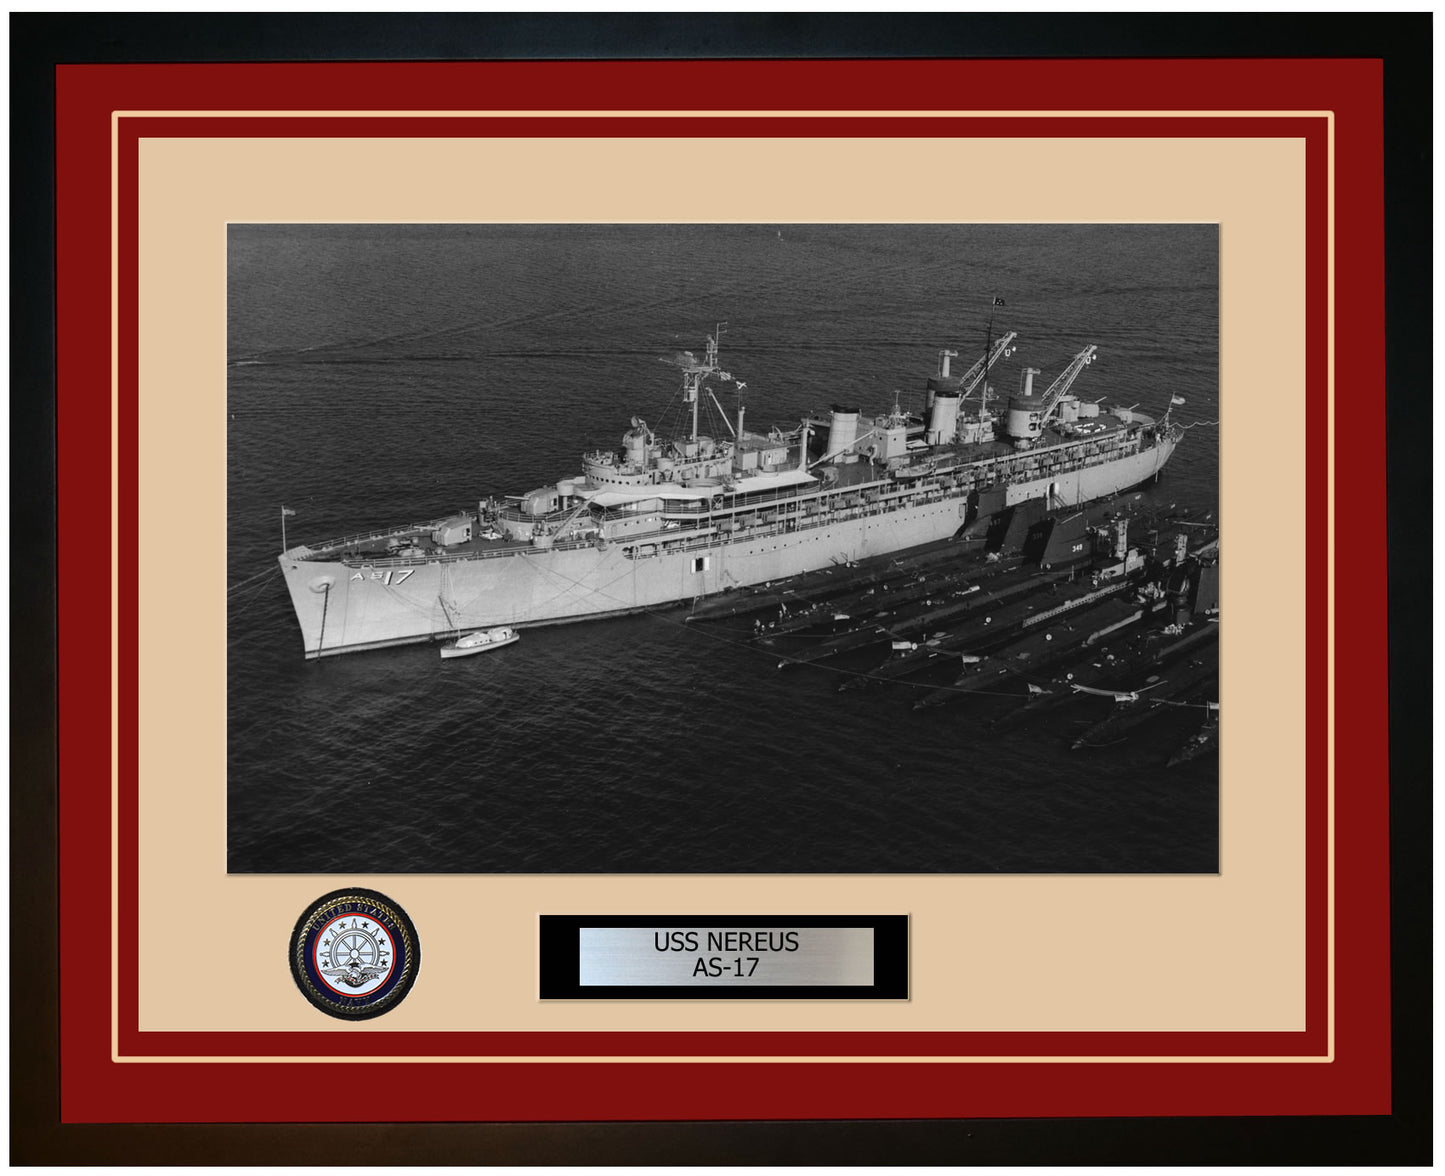 USS NEREUS AS-17 Framed Navy Ship Photo Burgundy